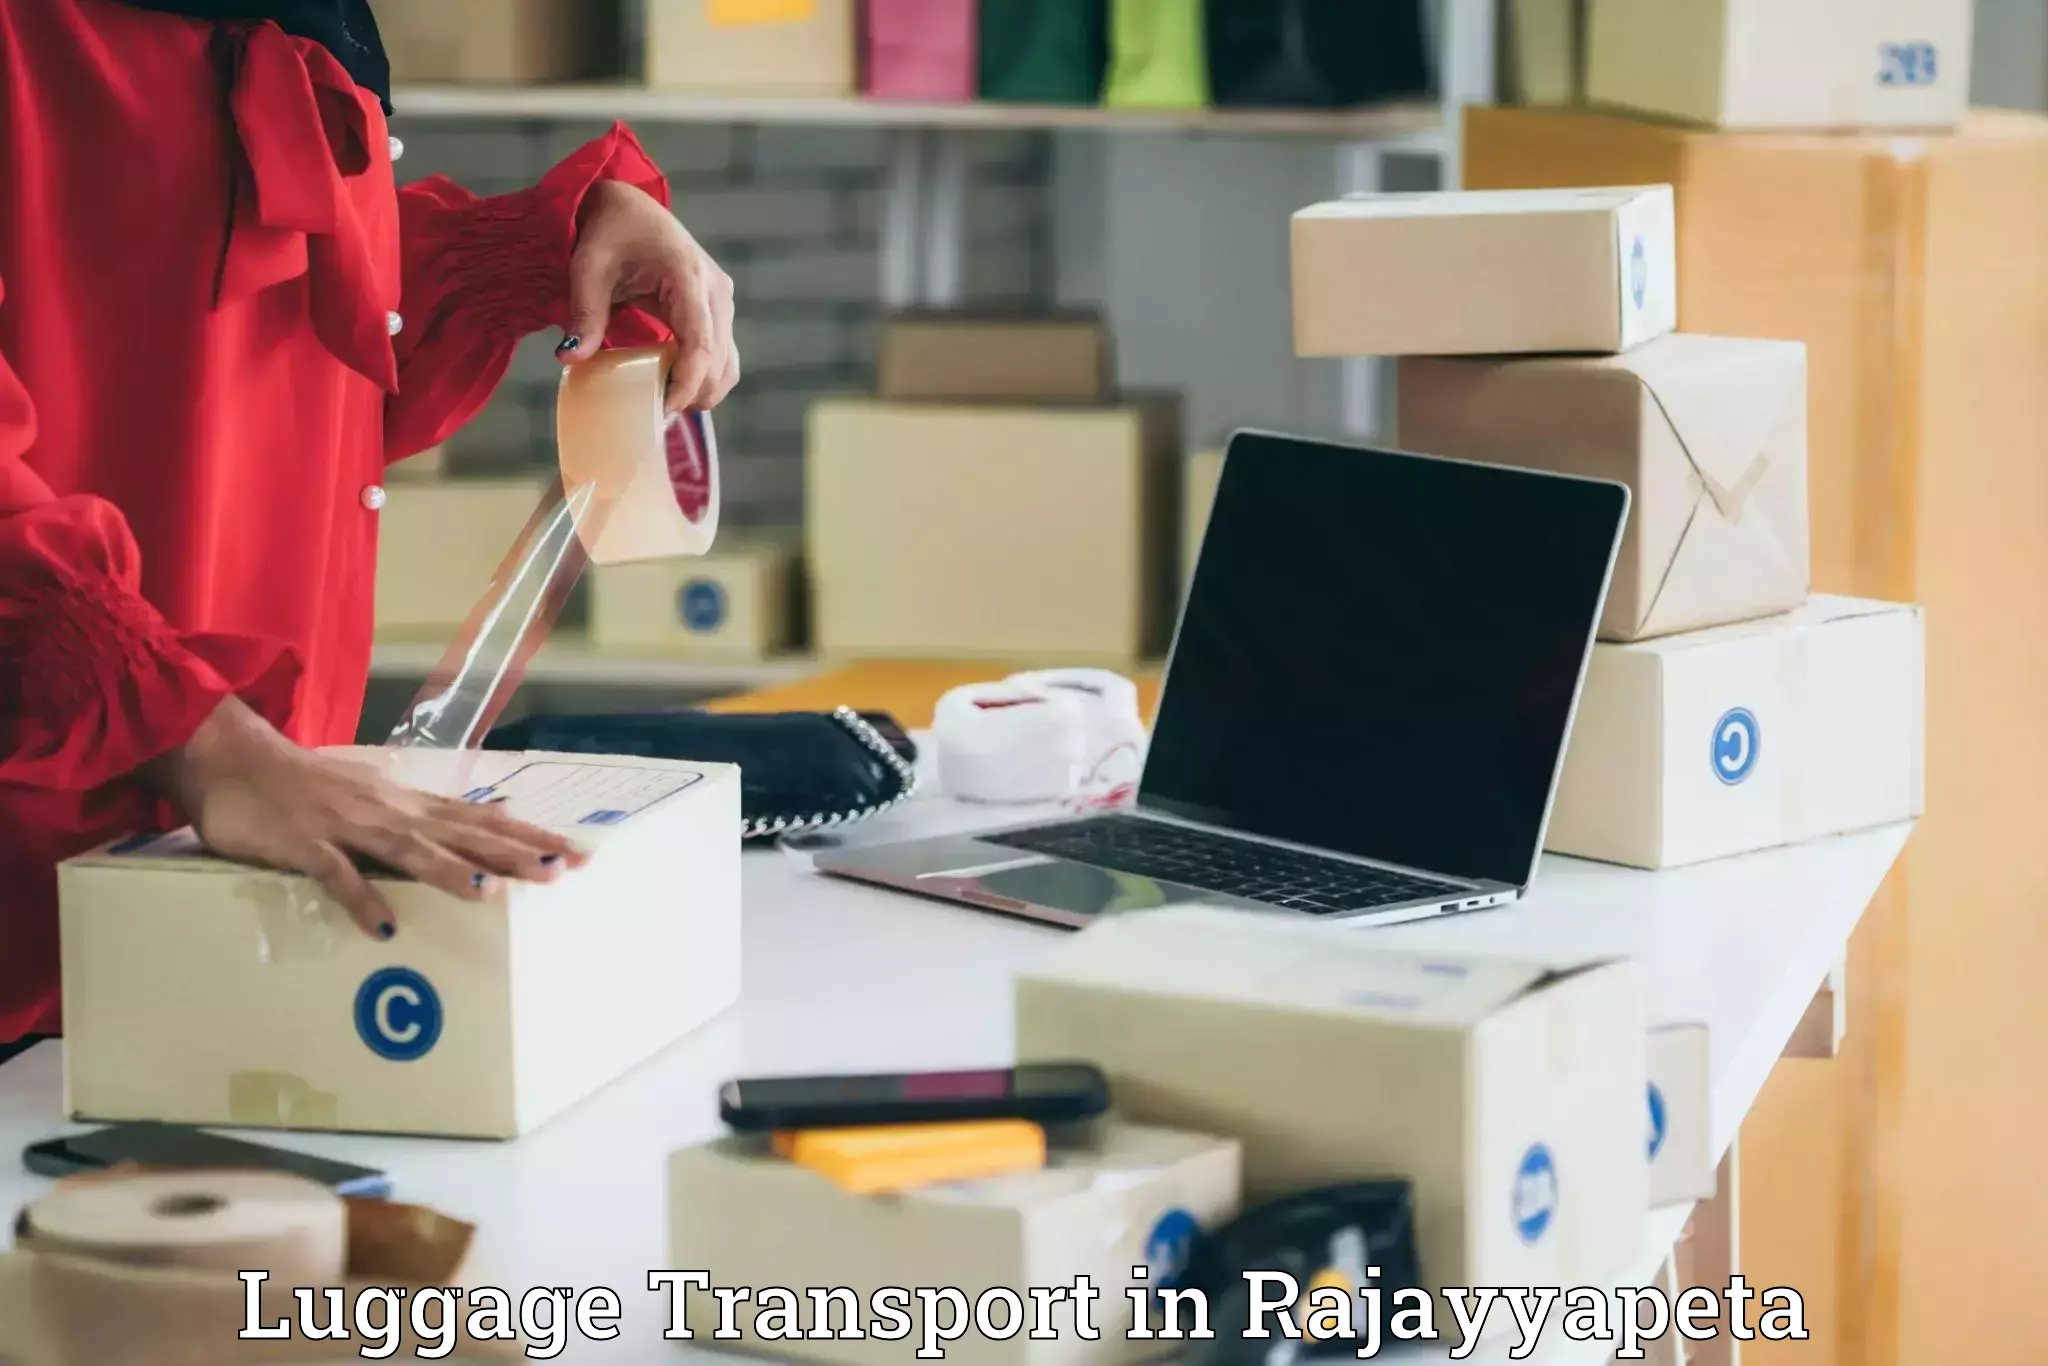 Luggage transport service in Rajayyapeta